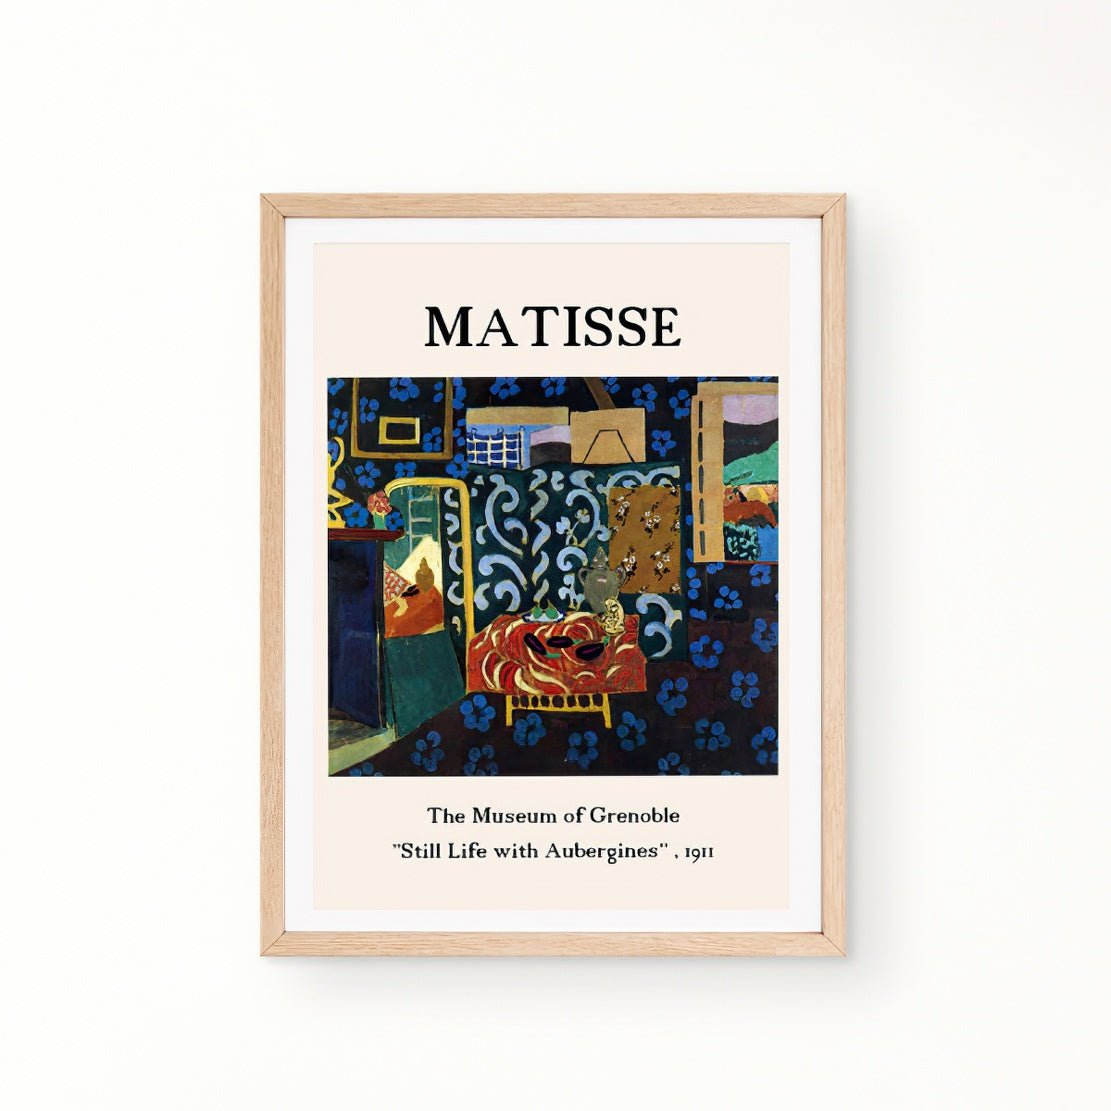 Henri Matisse "Still Life with Aubergines" 1911 art print poster